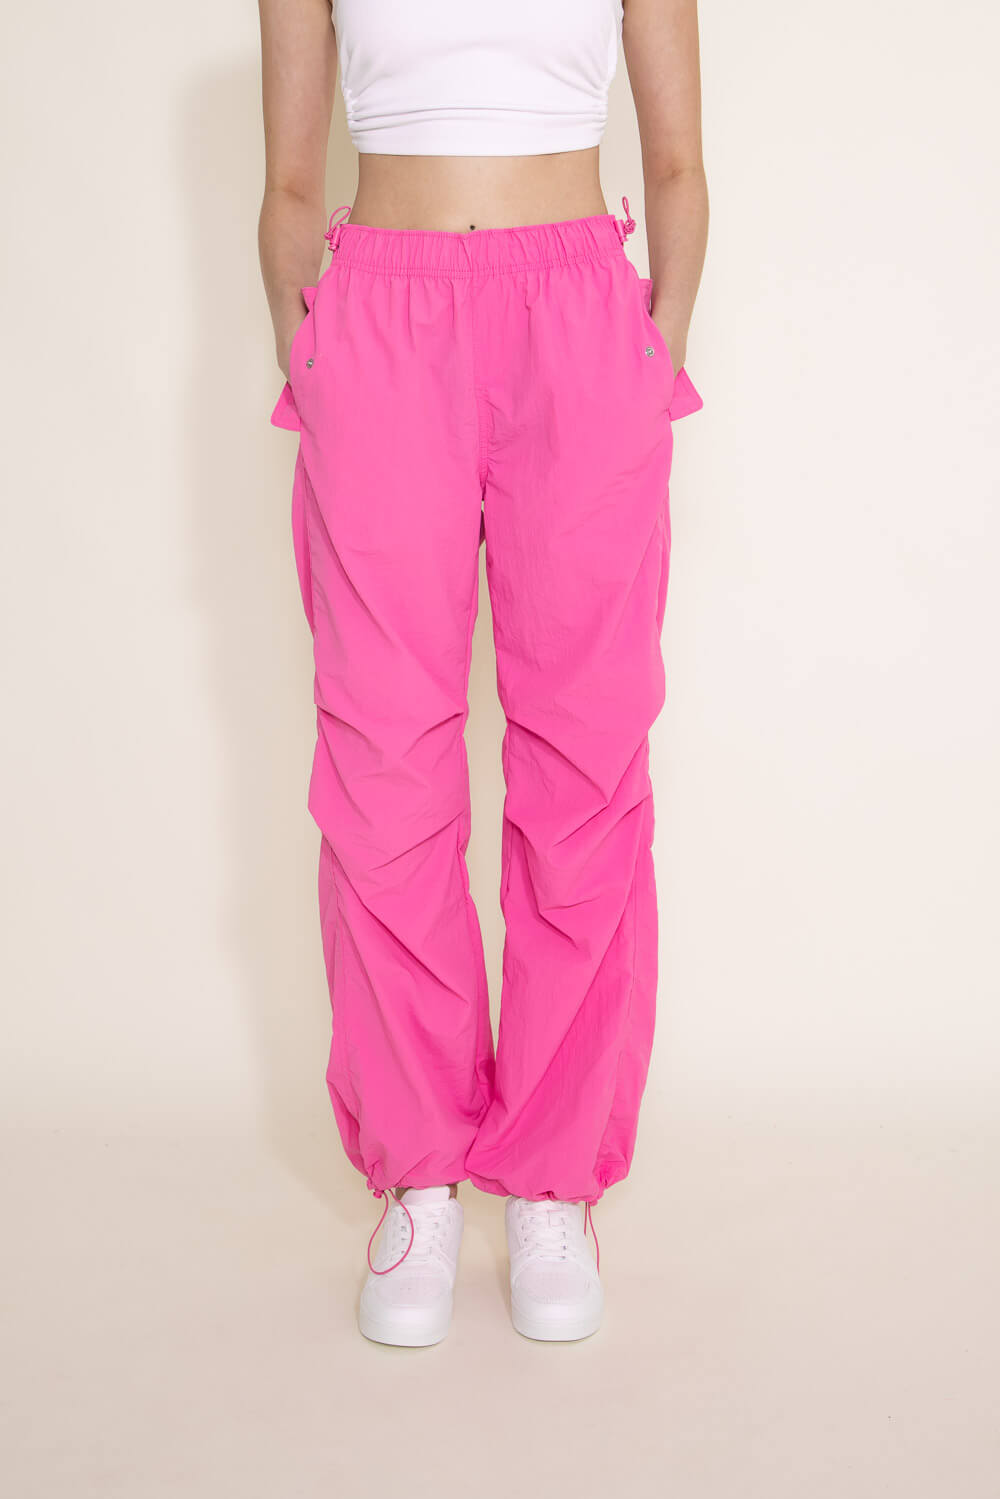 Pink PU Leather Cargo Pants Women Elastic Waist Leather Straight